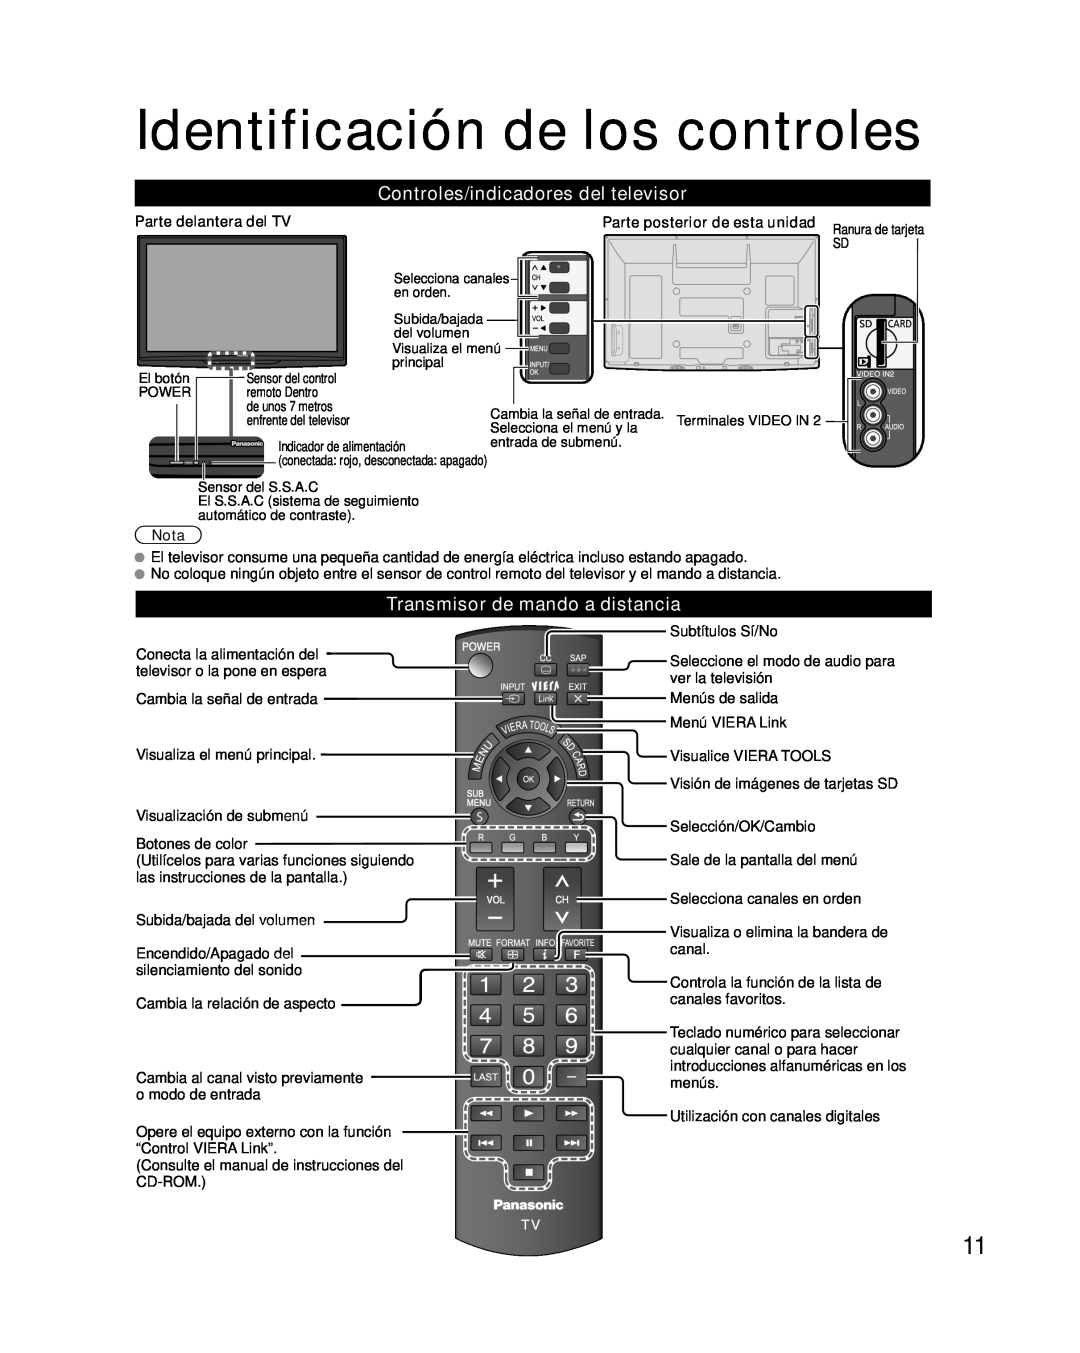 Panasonic TQB2AA0576 Identificación de los controles, Controles/indicadores del televisor, Transmisor de mando a distancia 